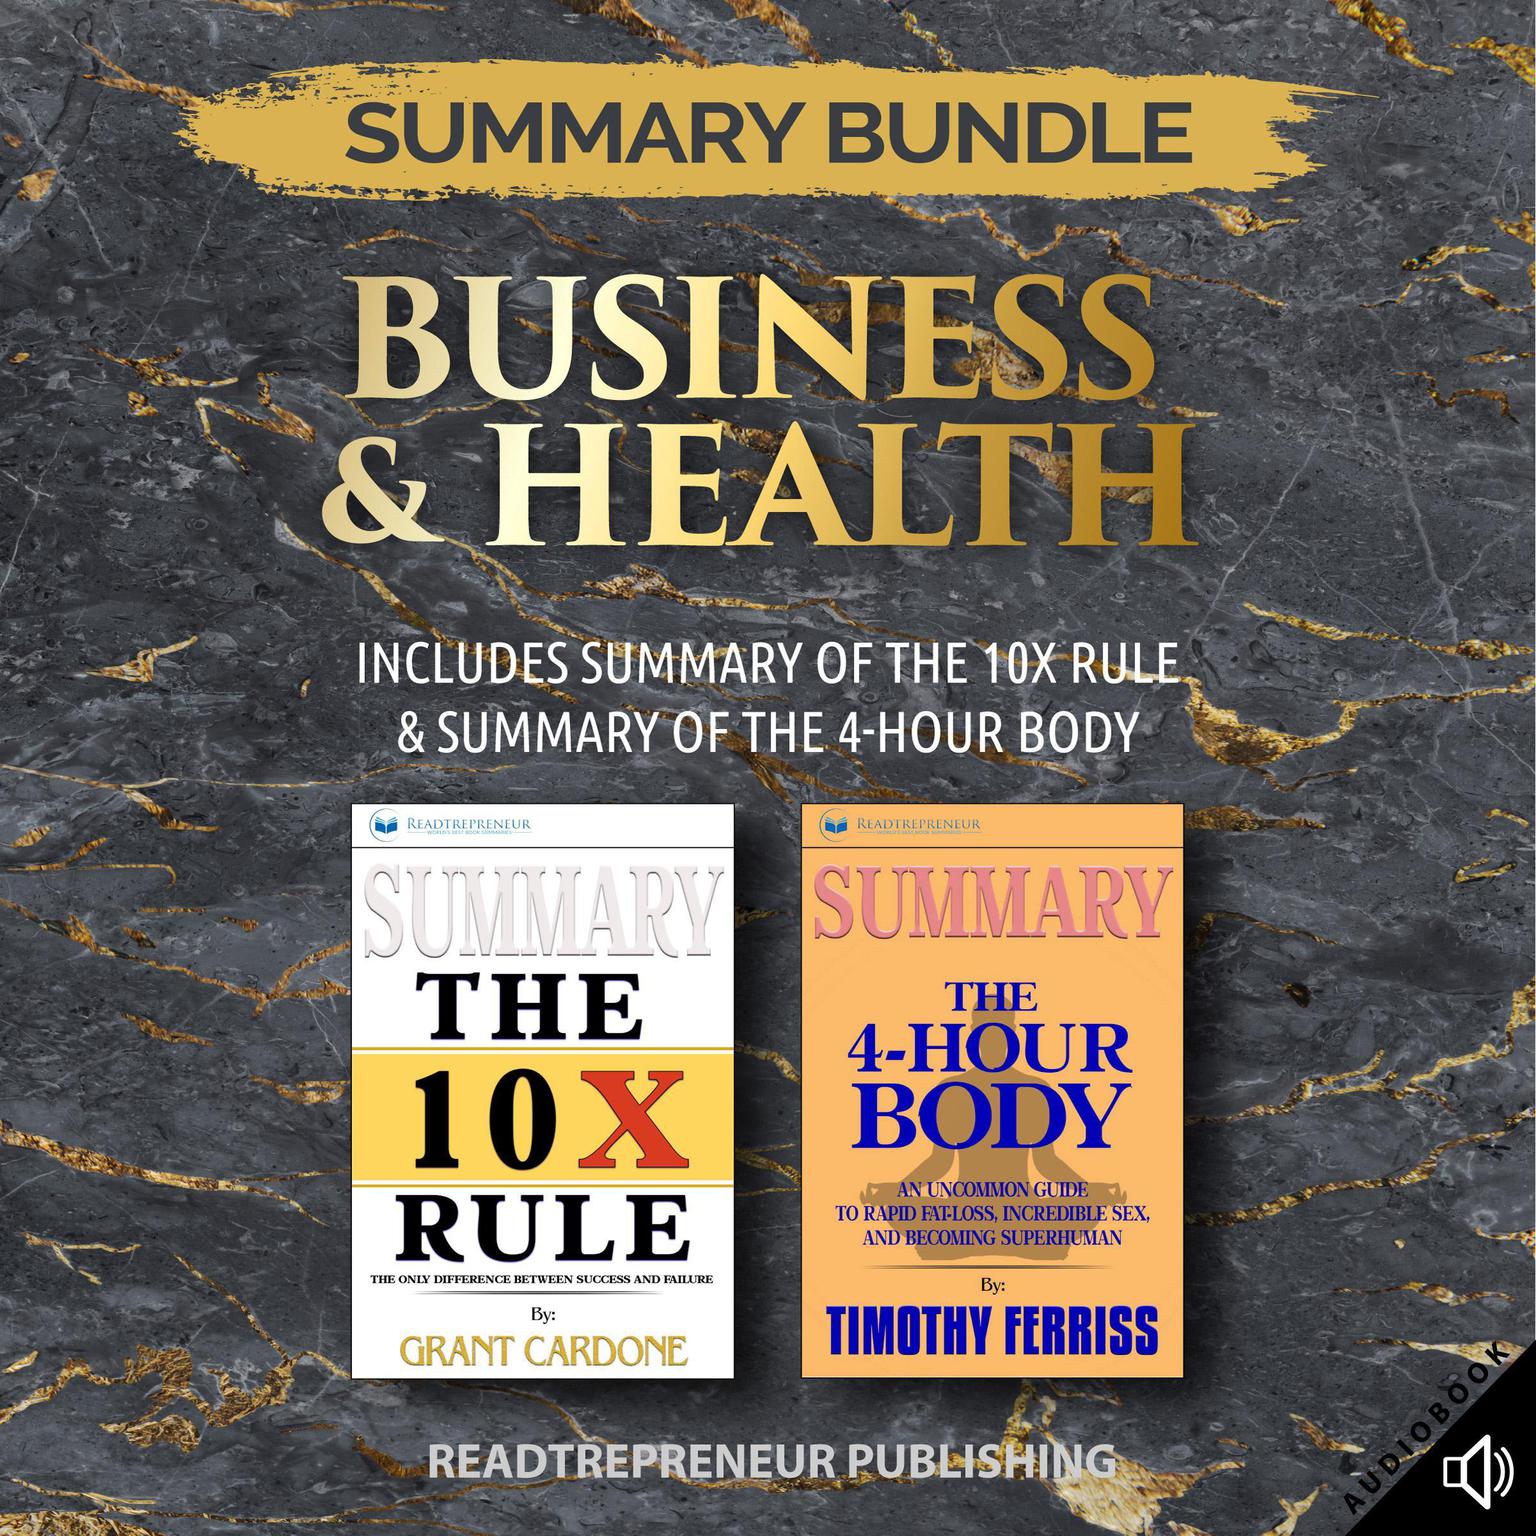 Summary Bundle: Business & Health | Readtrepreneur Publishing: Includes Summary of The 10X Rule & Summary of The 4-Hour Body Audiobook, by Readtrepreneur Publishing